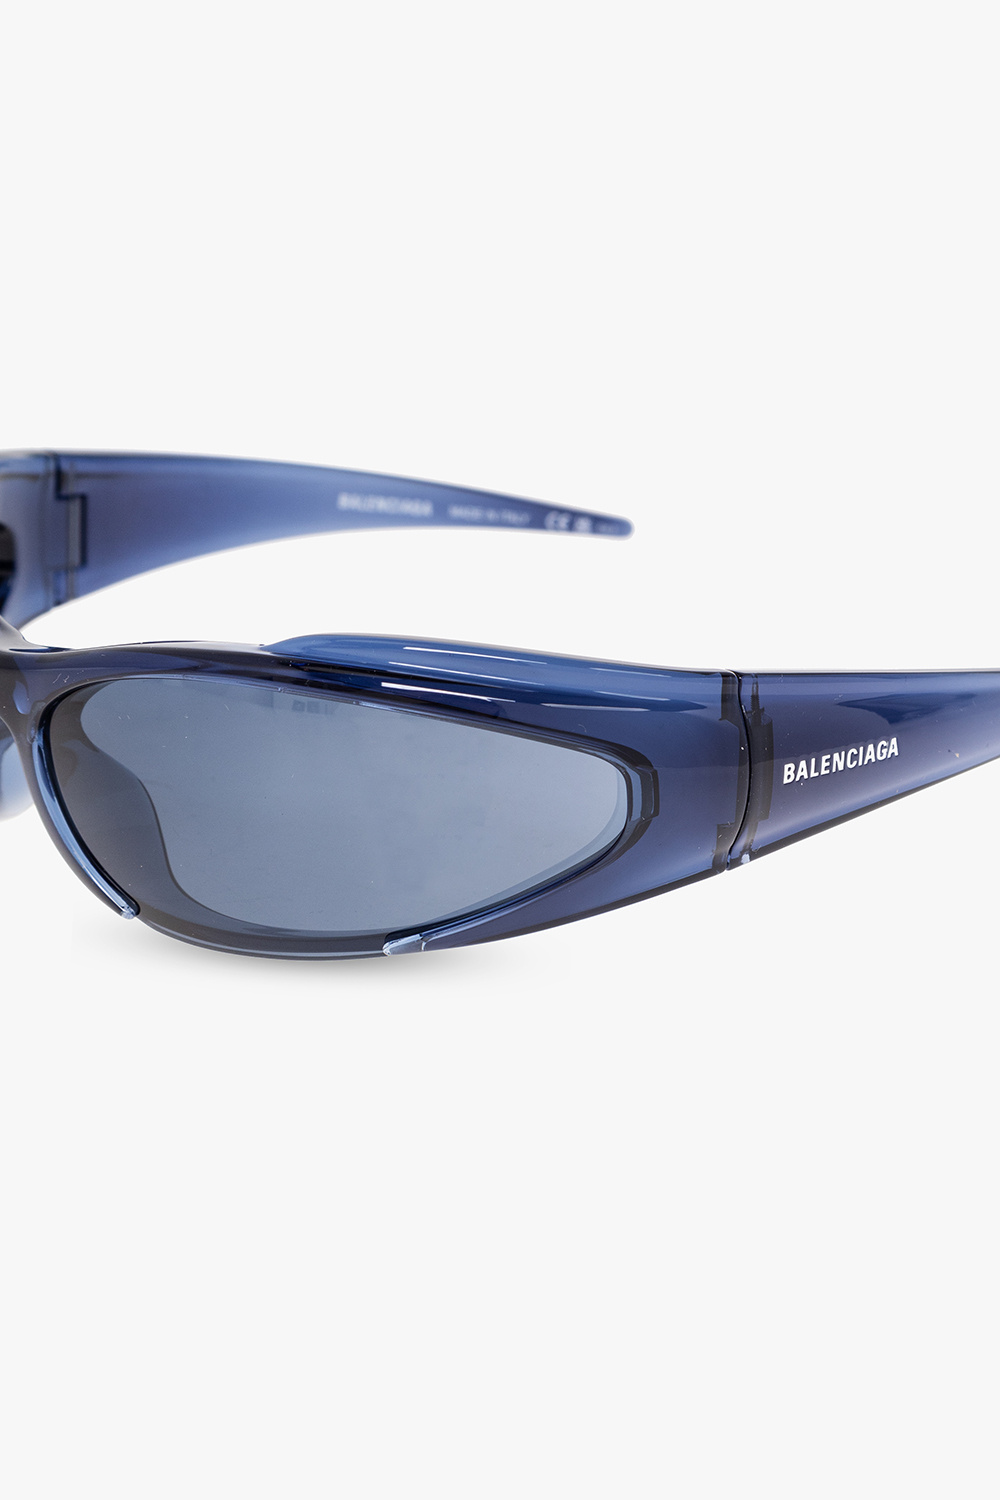 Balenciaga ‘Reverse Xpander Rectangle’ Mach-S sunglasses